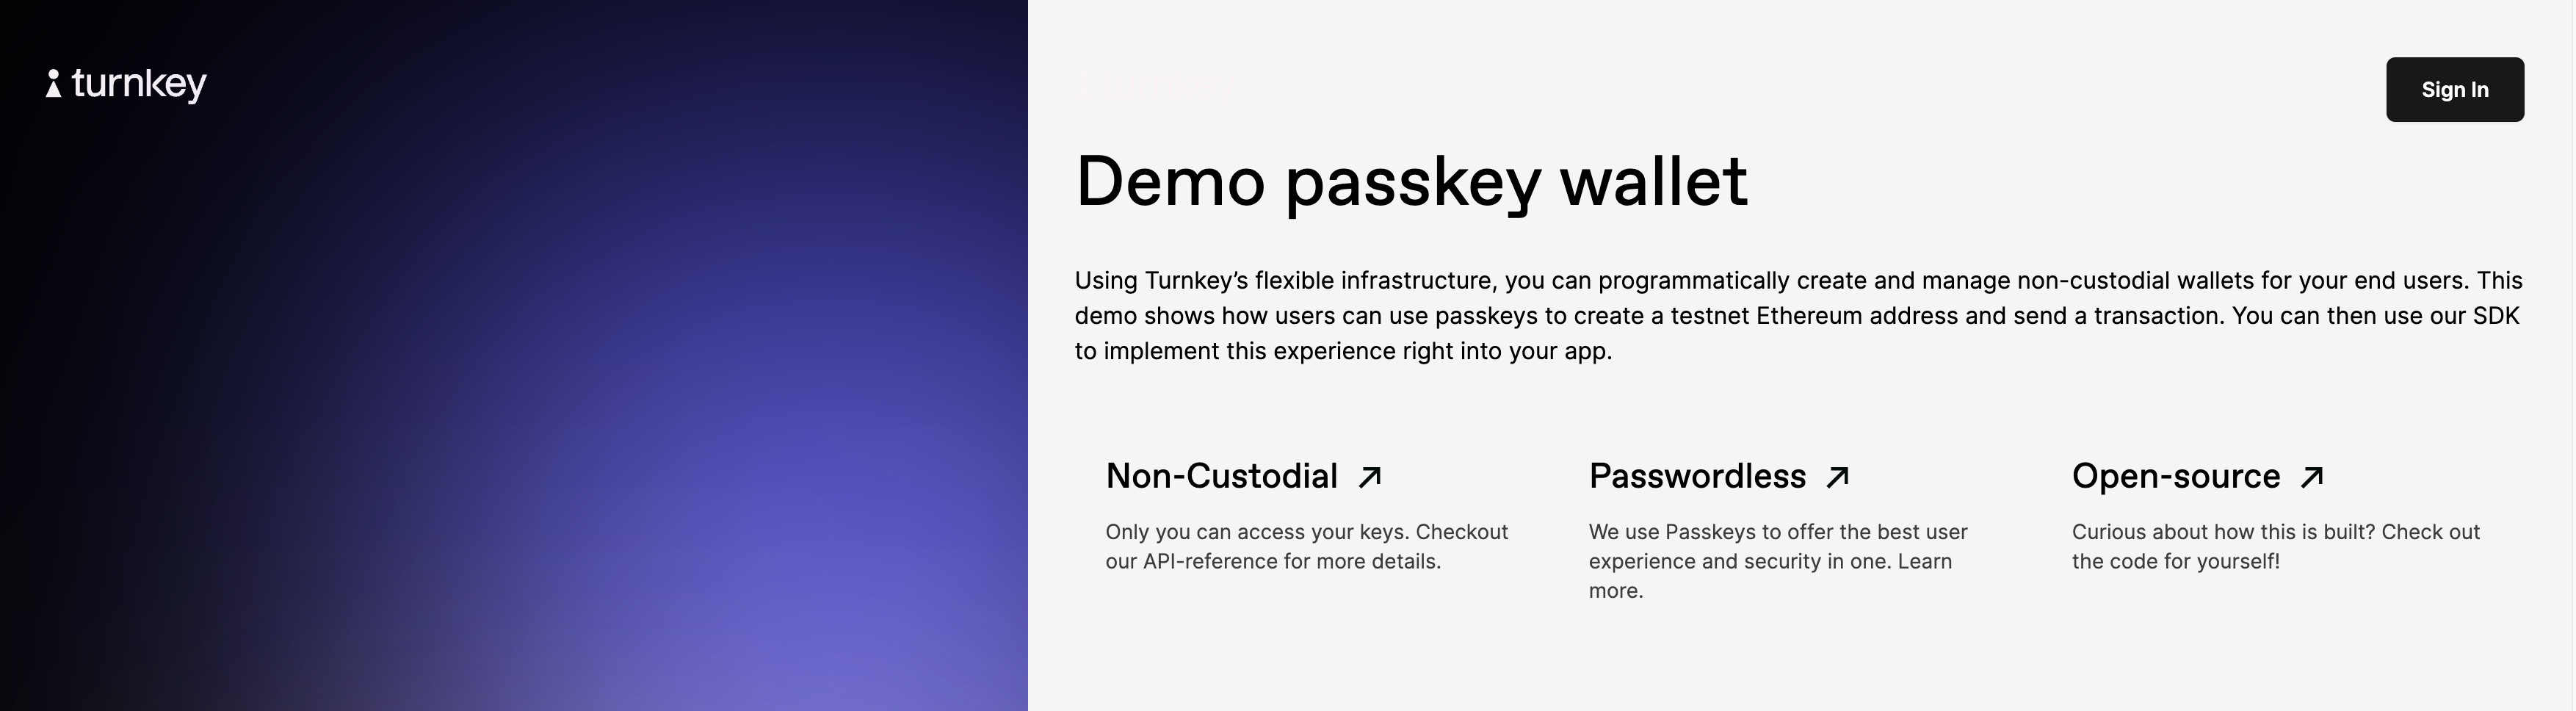 demo passkey wallet screenshot